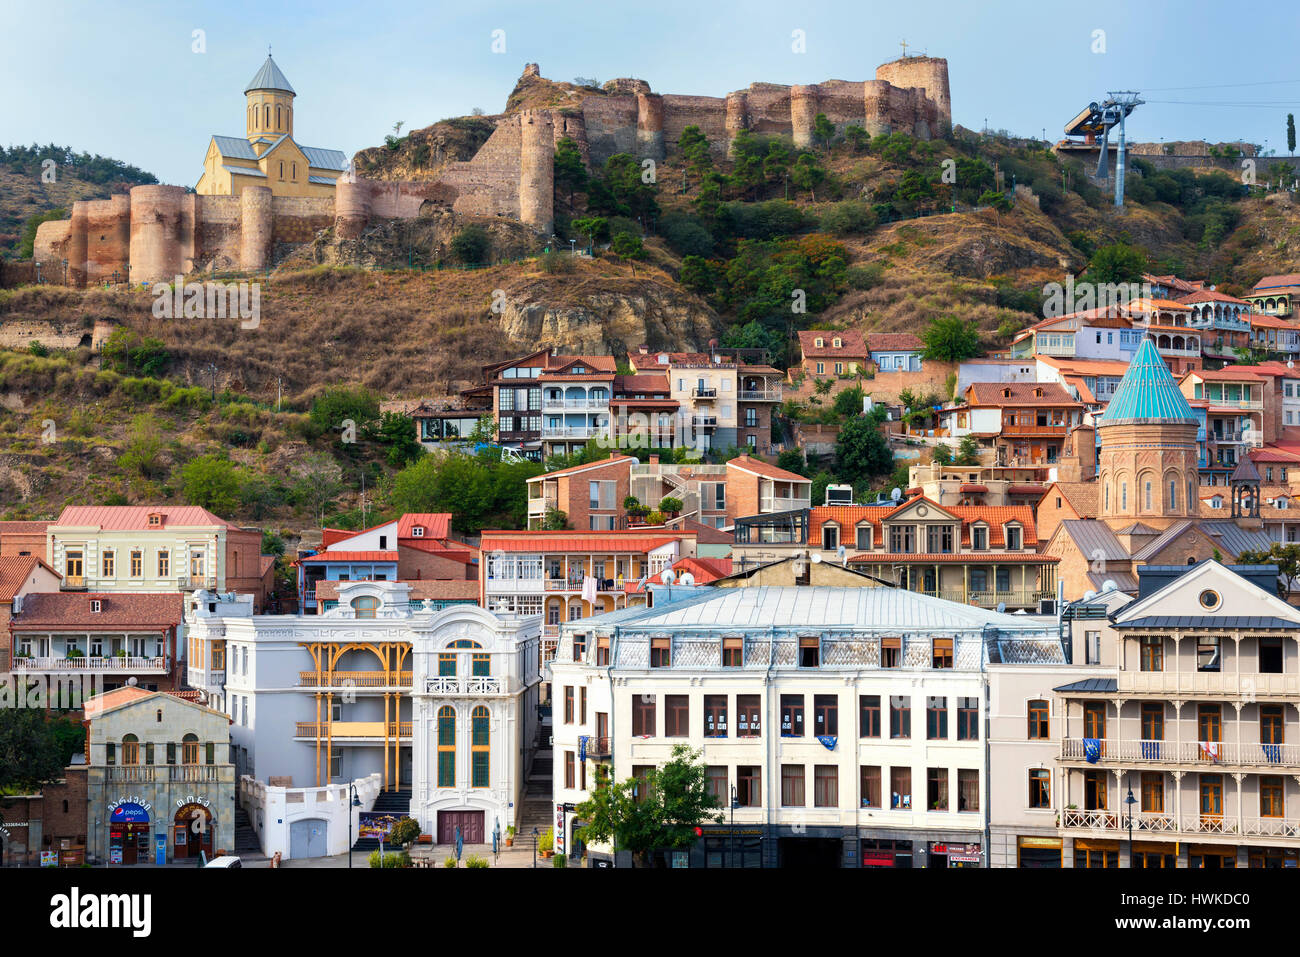 Fortaleza Narikala y la iglesia de San Nicolás, Tbilisi, Georgia, el Cáucaso, Oriente Medio, Asia Foto de stock